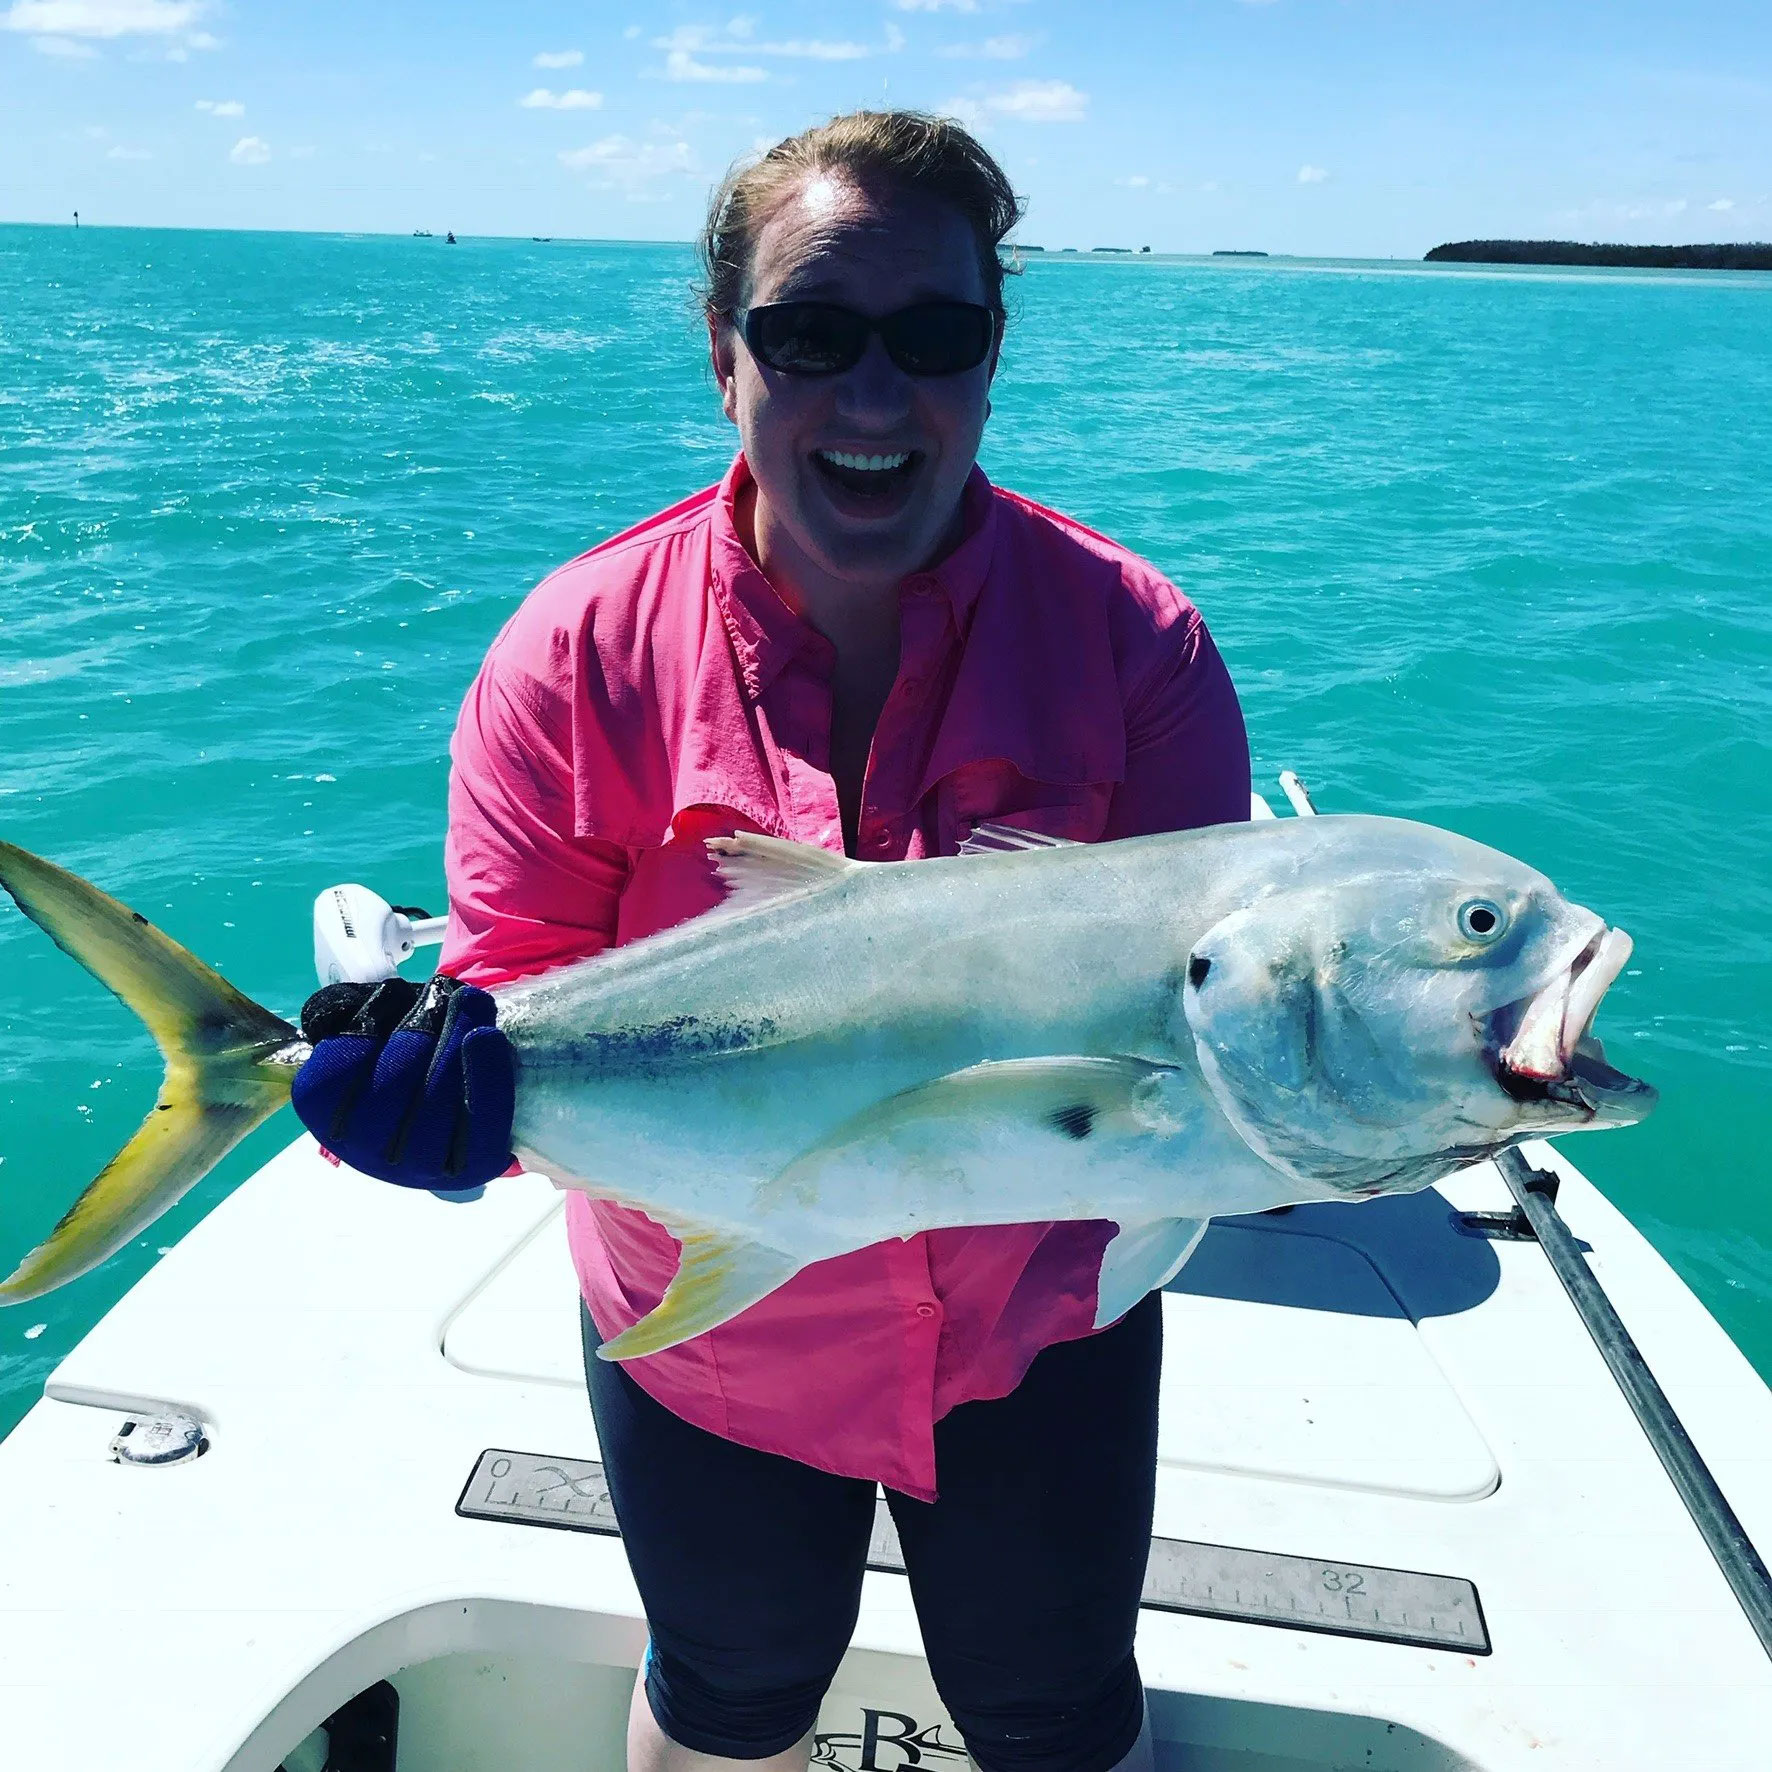 Smiling woman holding big fish on desvk of fishing boat